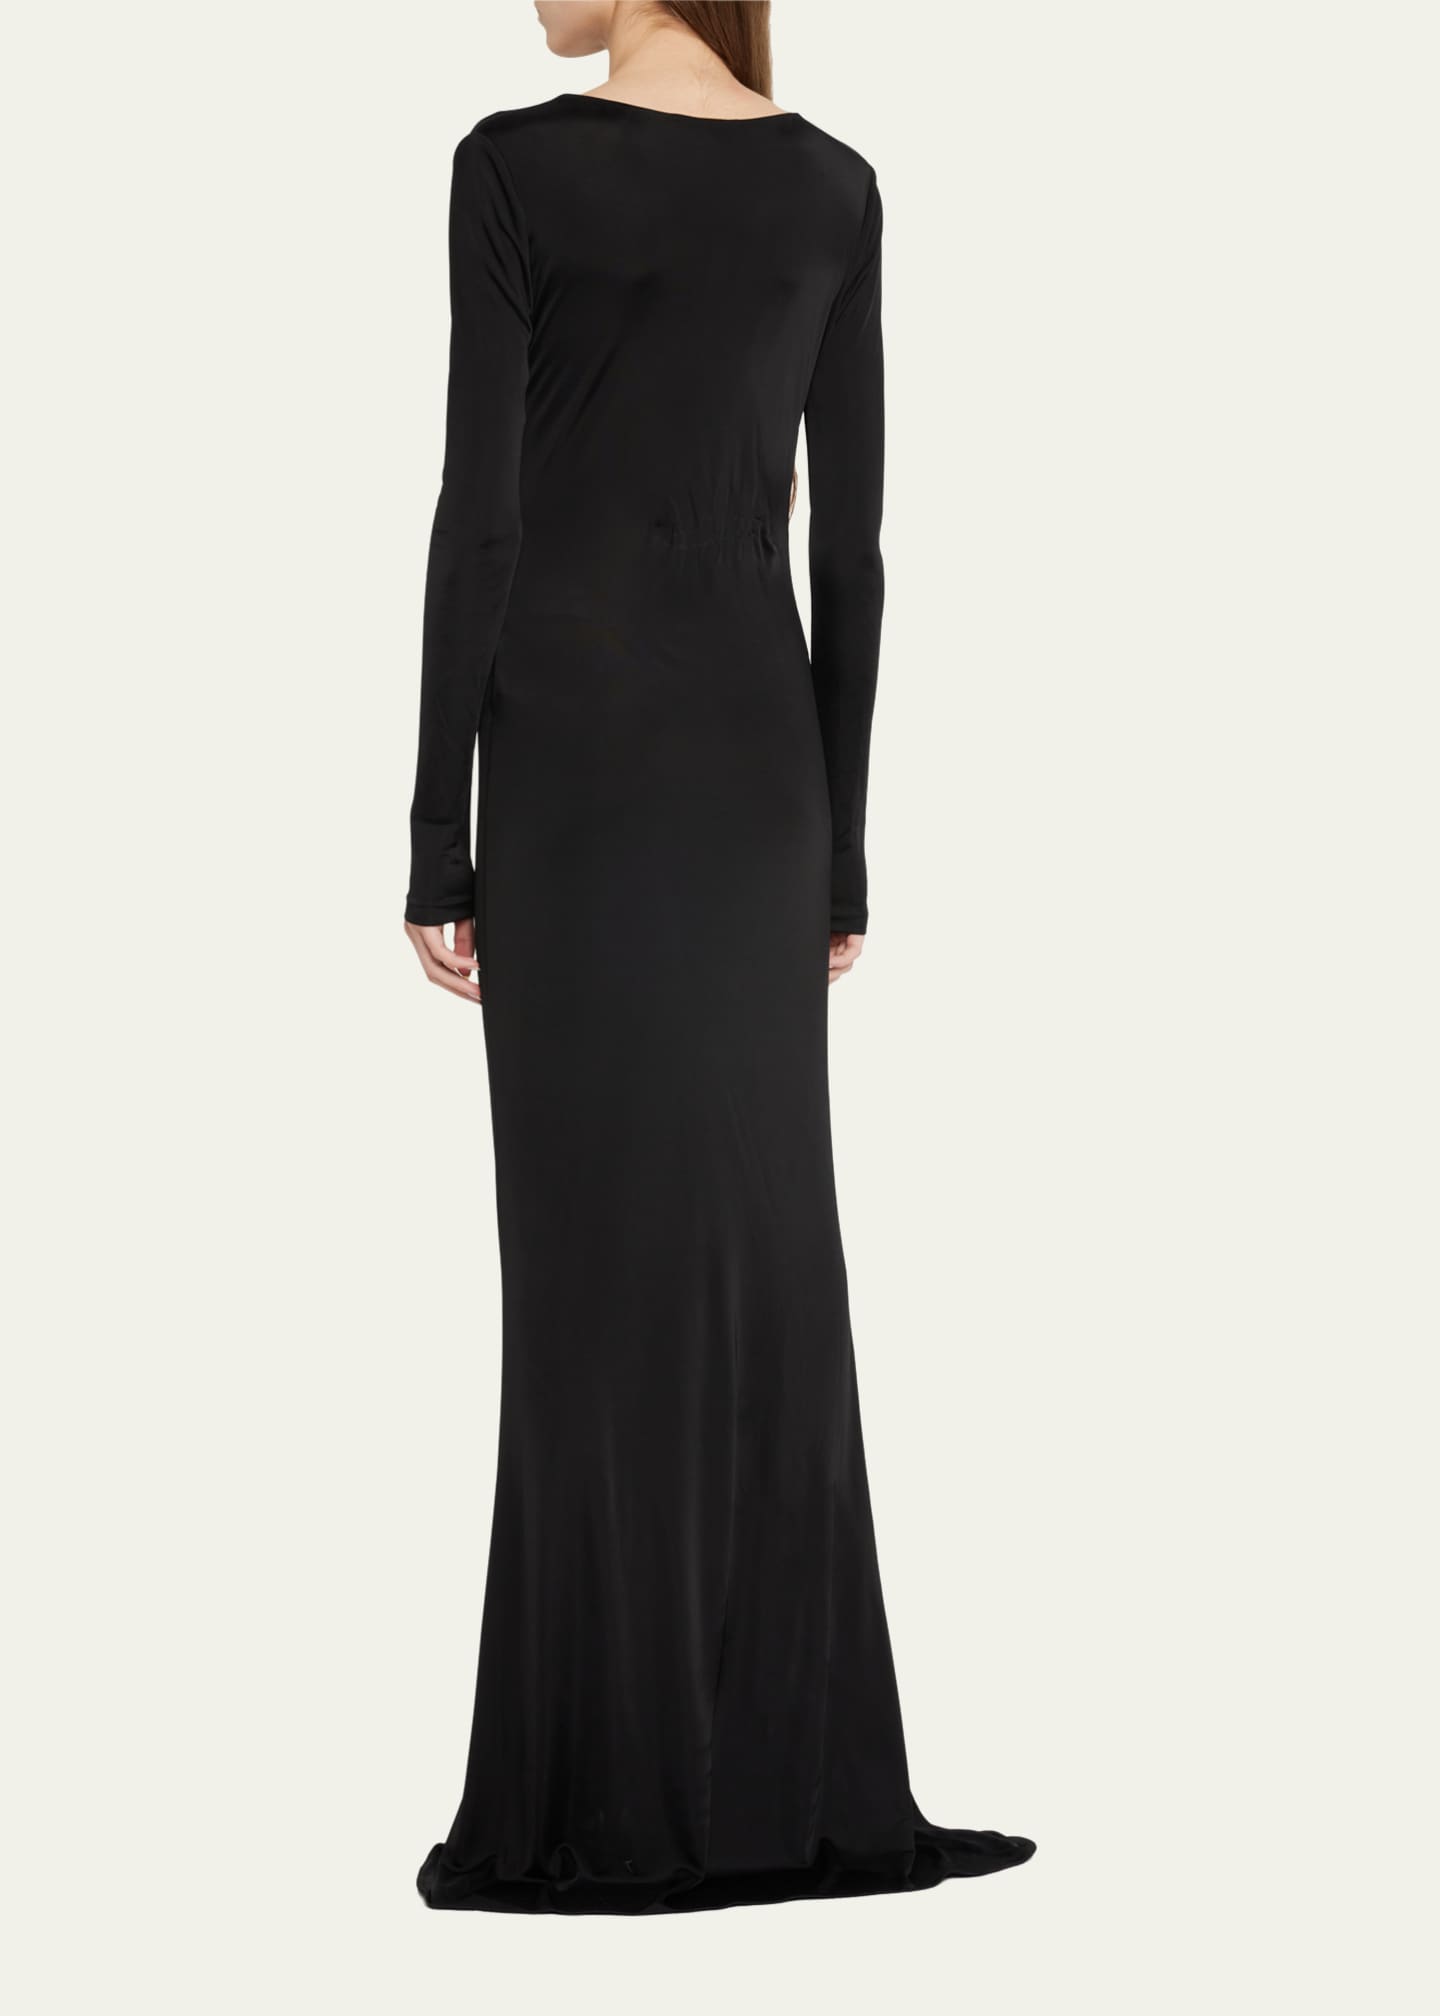 Saint Laurent Ruched Long-Sleeve Jersey Gown - Bergdorf Goodman